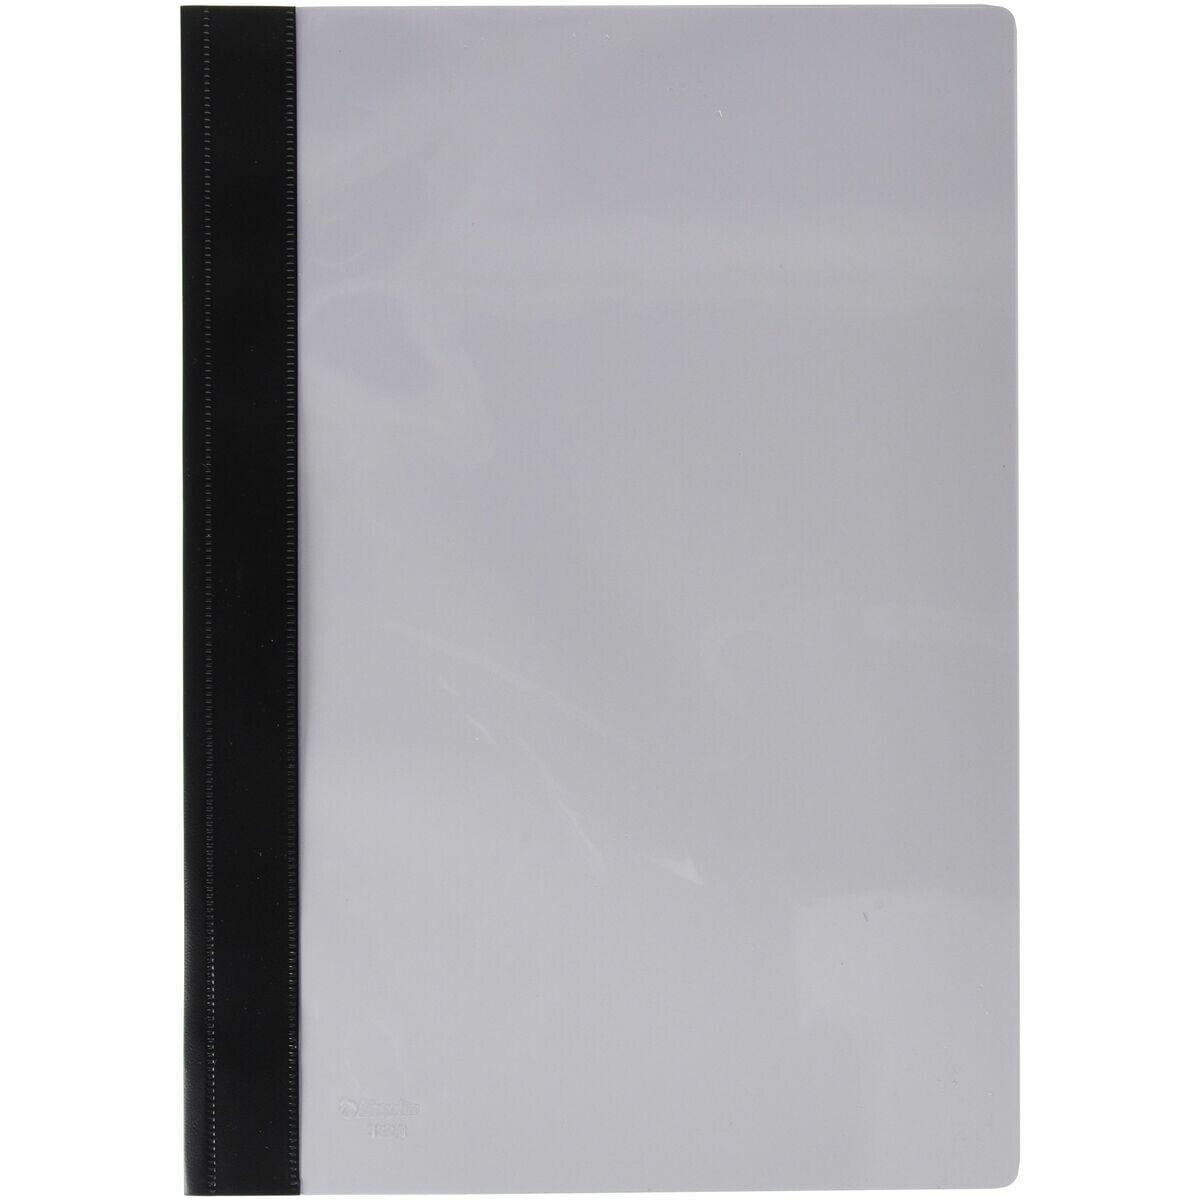 Organiser Folder Esselte Black A4 Din A4 (50 Units)